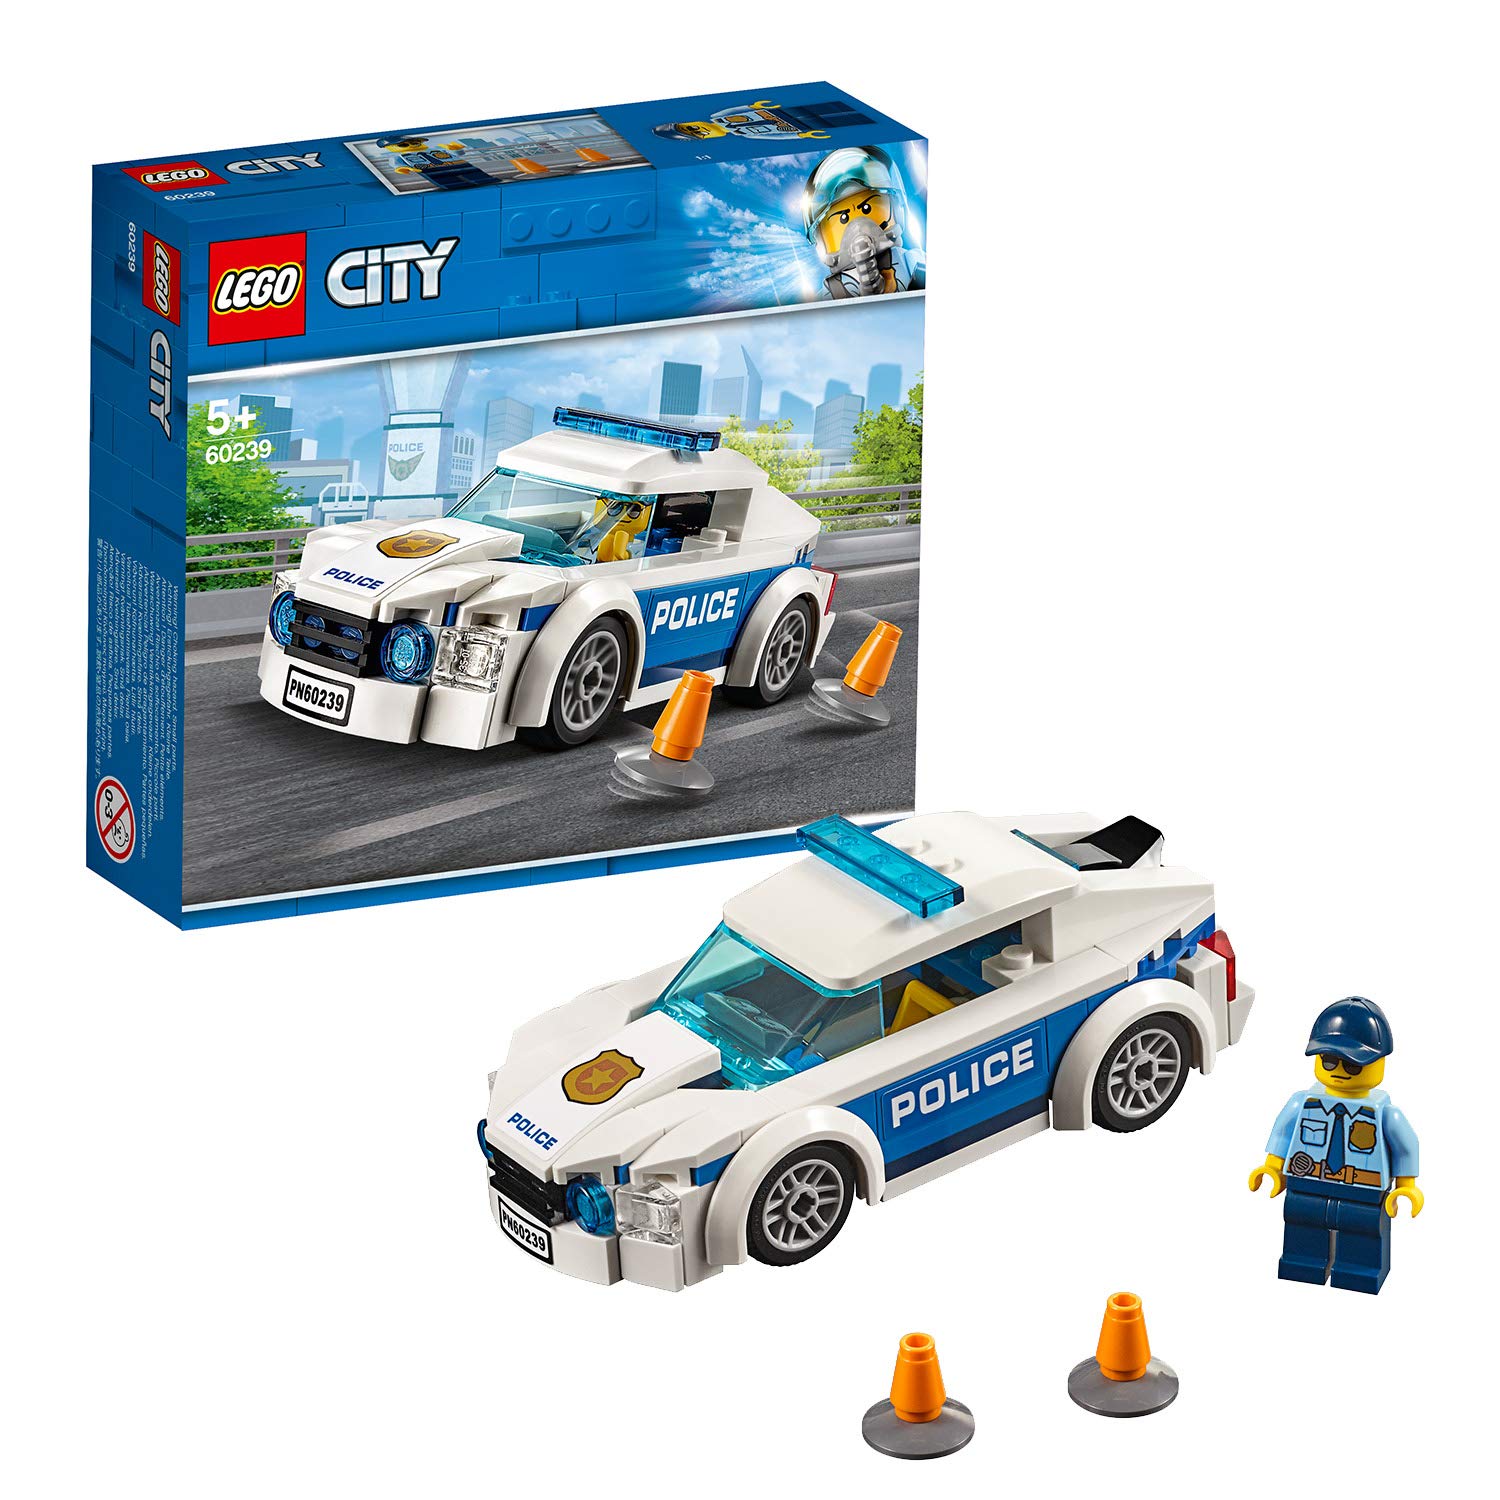 Lego 60239 City Patrol Car, Multi-Colour